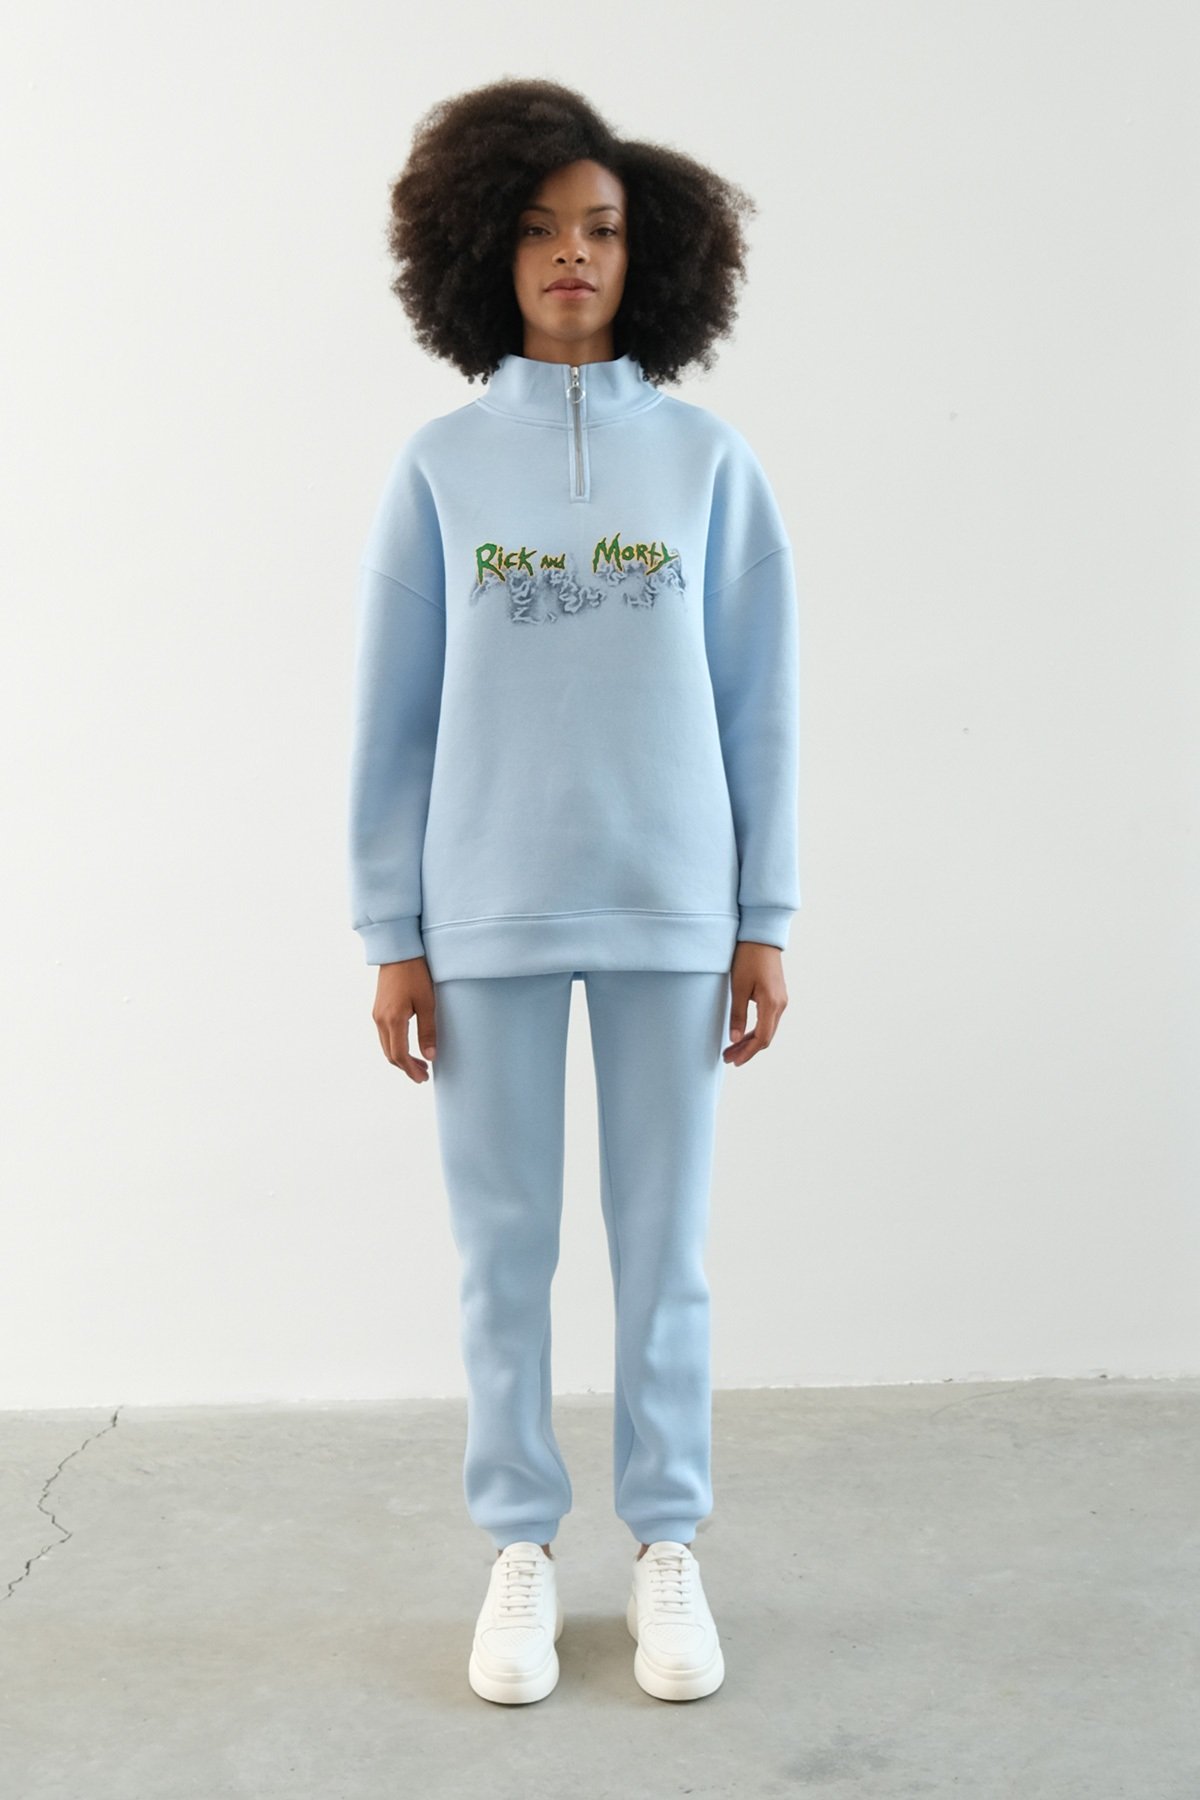 Rick and Morty Baskılı Sweatshirt Takımı - Mavi - 6003 - 2 Lİ TAKIM -  ParkHande